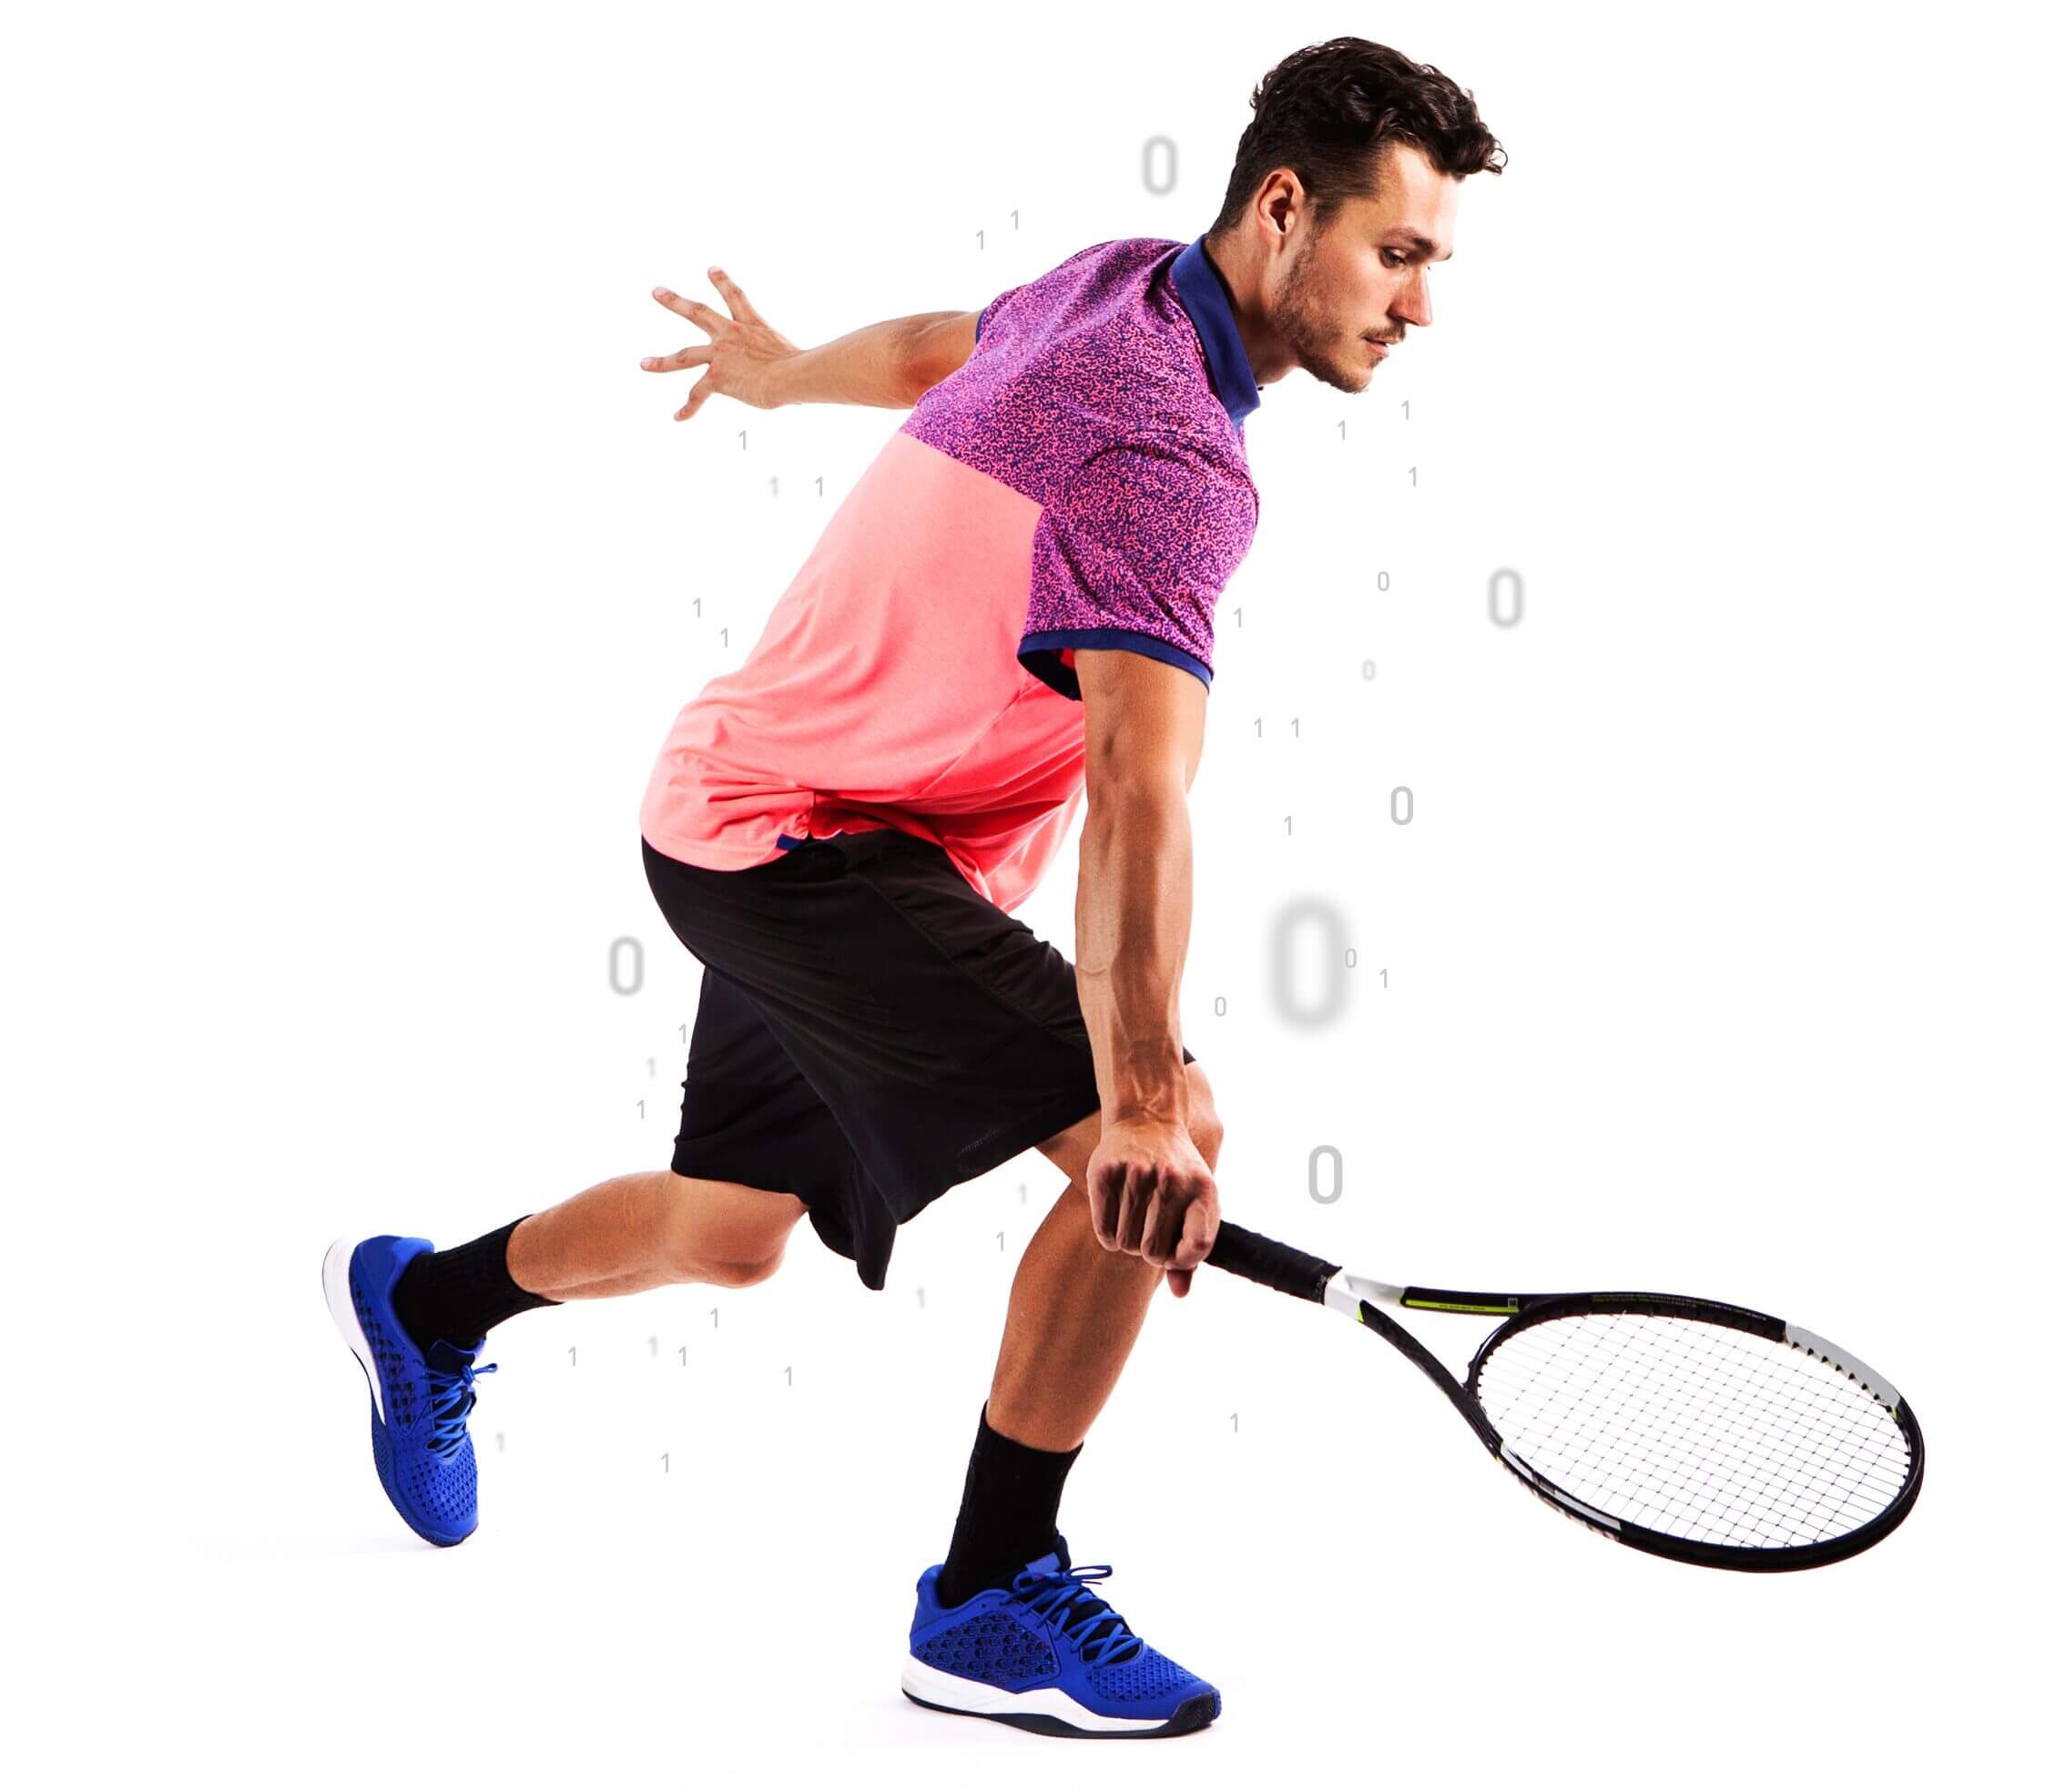 TokenStars_tennis